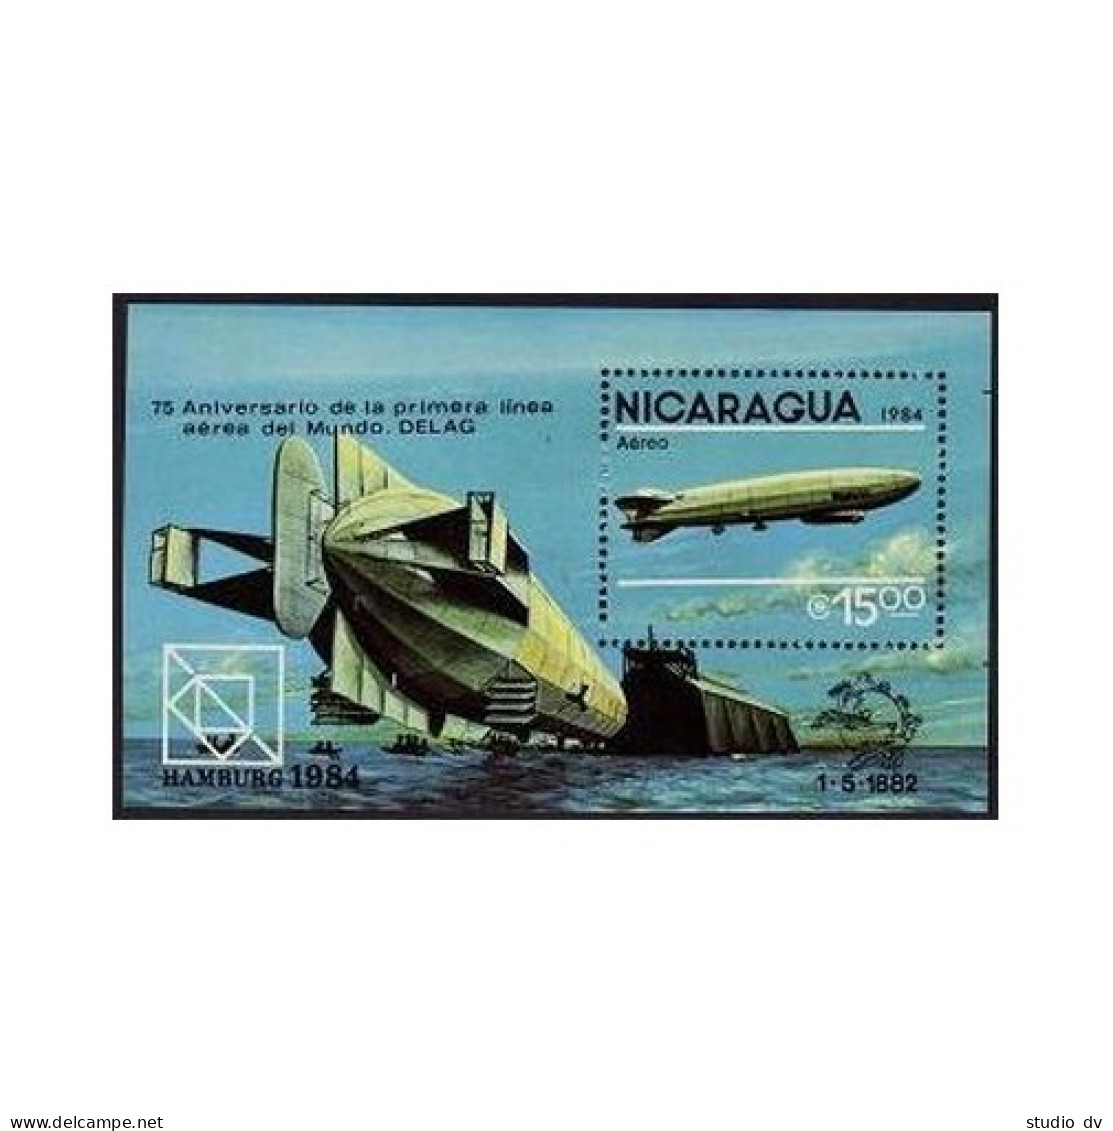 Nicaragua C1045, MNH. Michel 2520 Bl.158. HAMBURG-1984: Dirigible. UPU Emblem. - Nicaragua